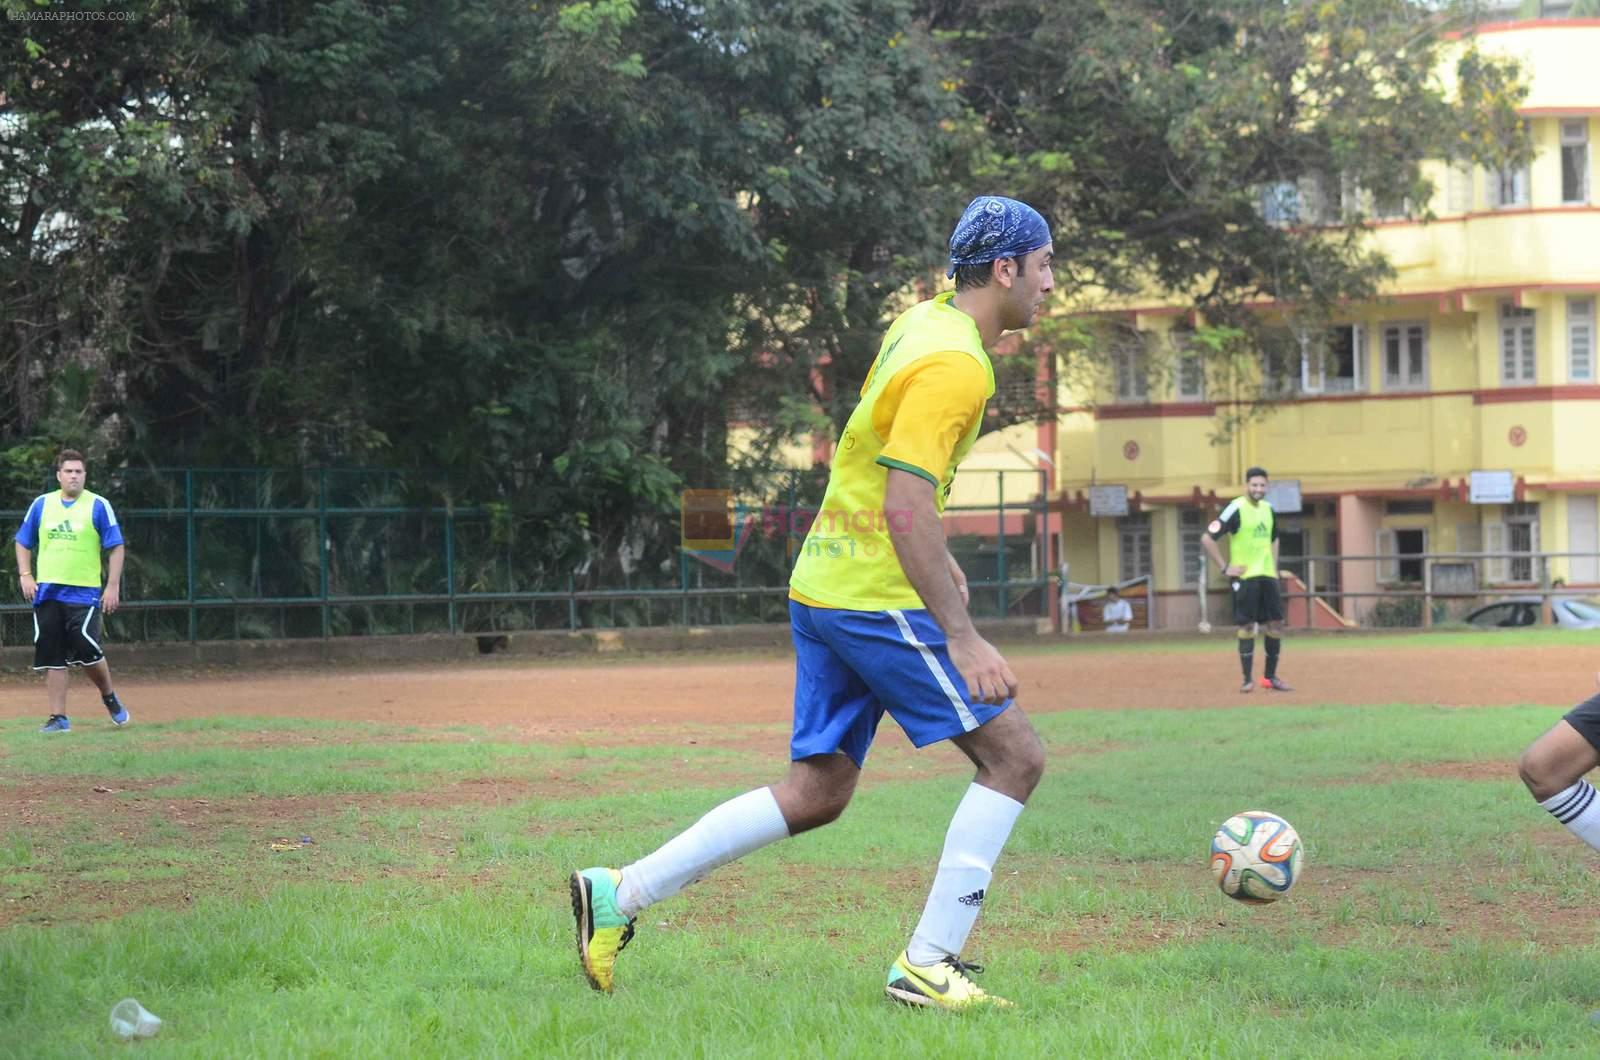 Ranbir Kapoor snapped at all star football practice session in Bandra, Mumbai on 28th June 2015